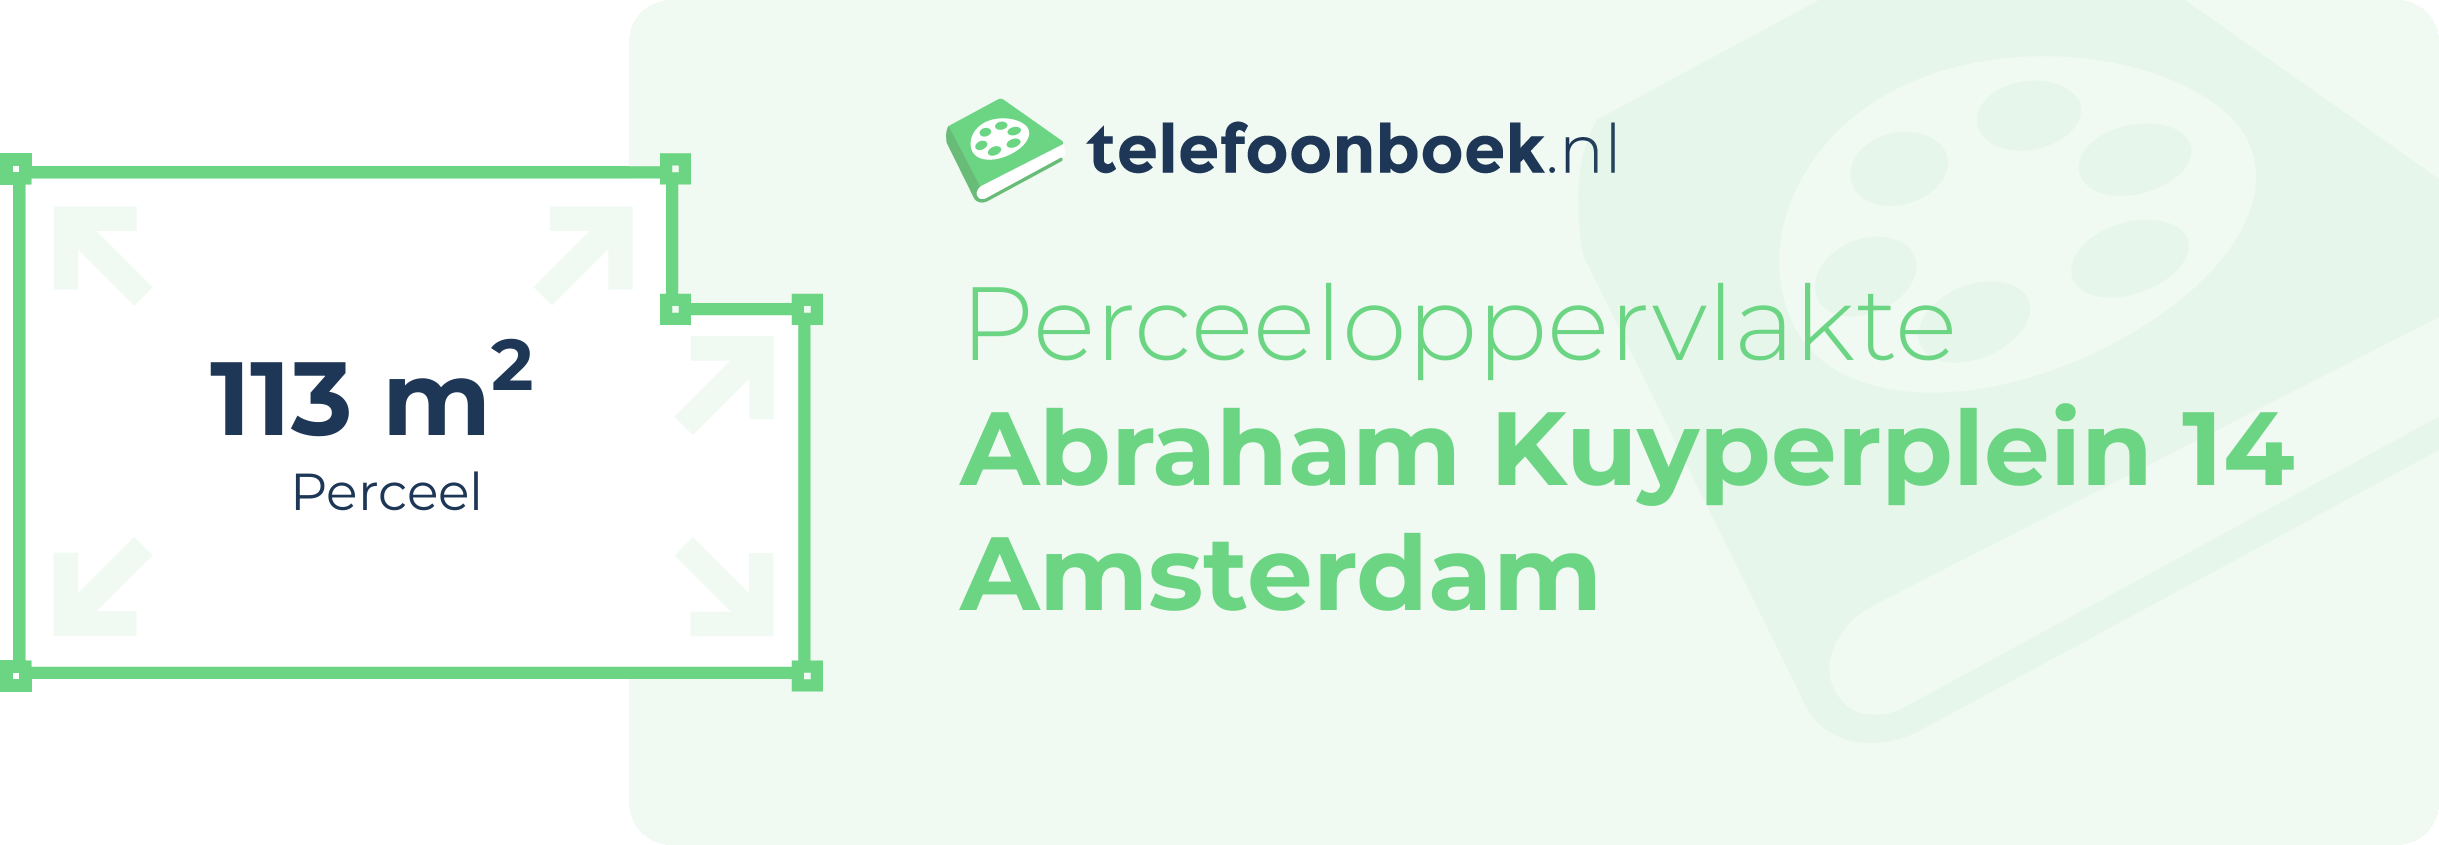 Perceeloppervlakte Abraham Kuyperplein 14 Amsterdam